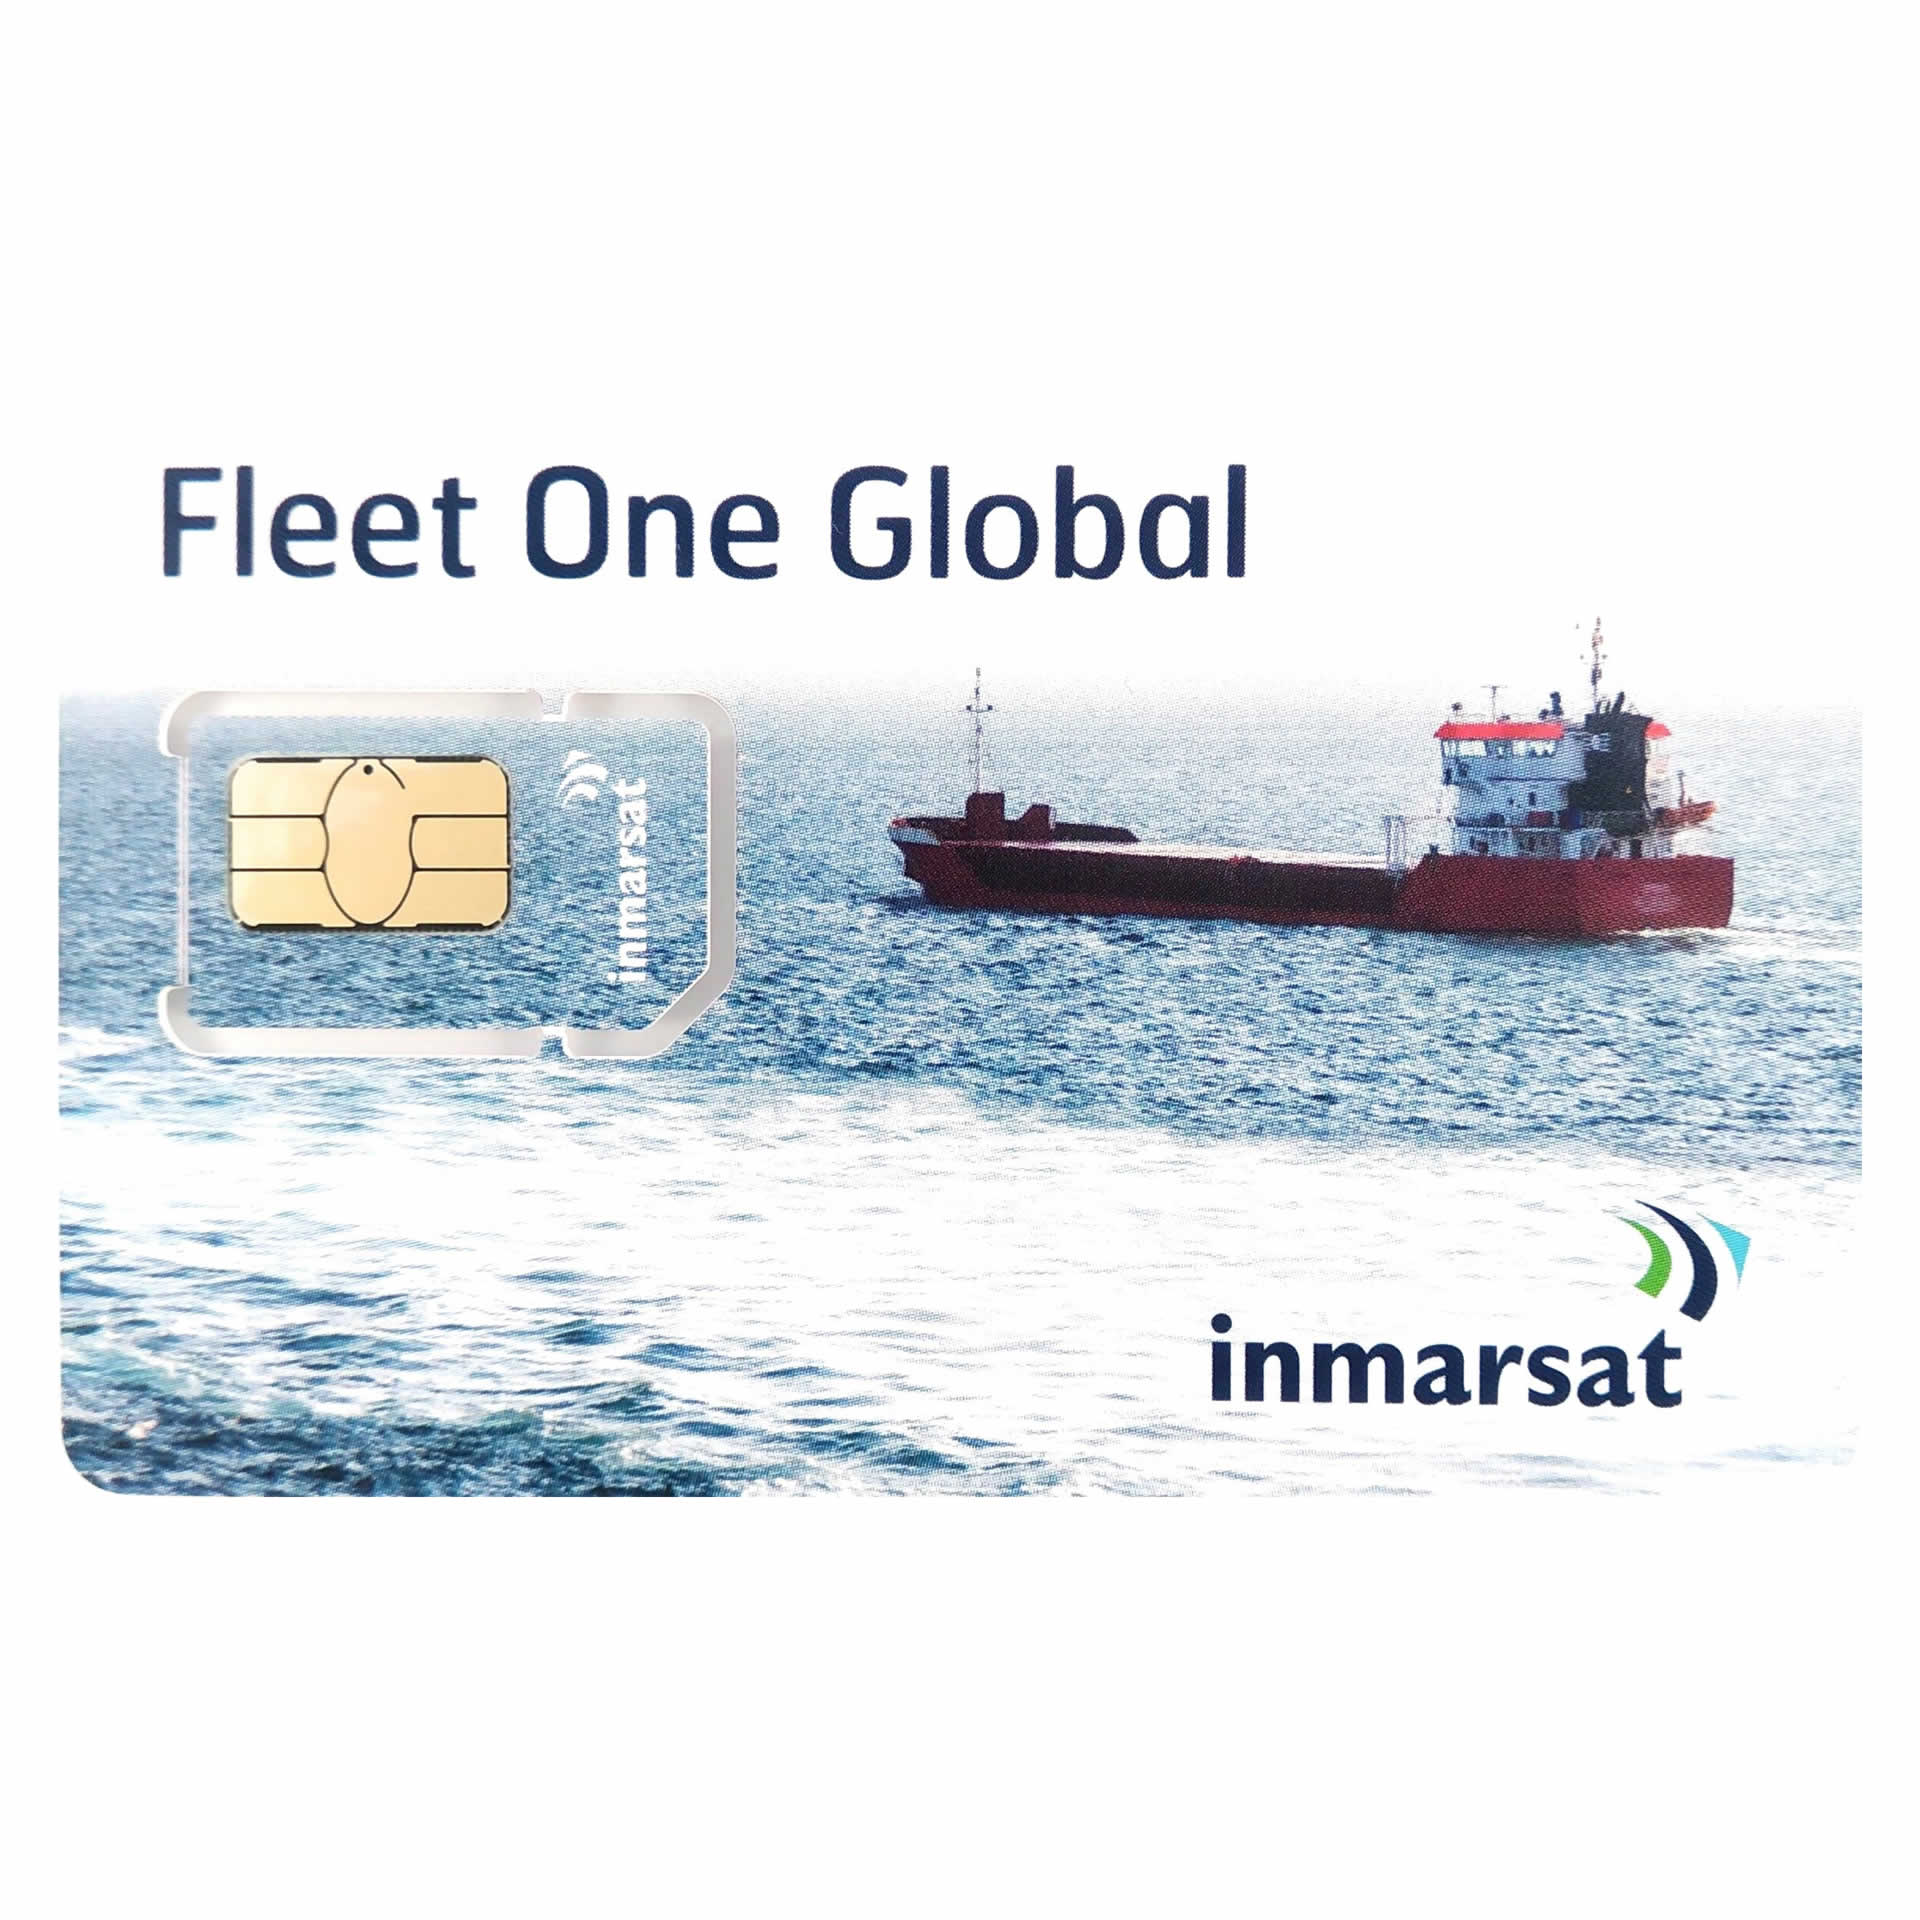 INMARSAT Prepaid-Karte Aufladbar GLOBAL FLEET ONE - 500 UNITS - 90 TAGE